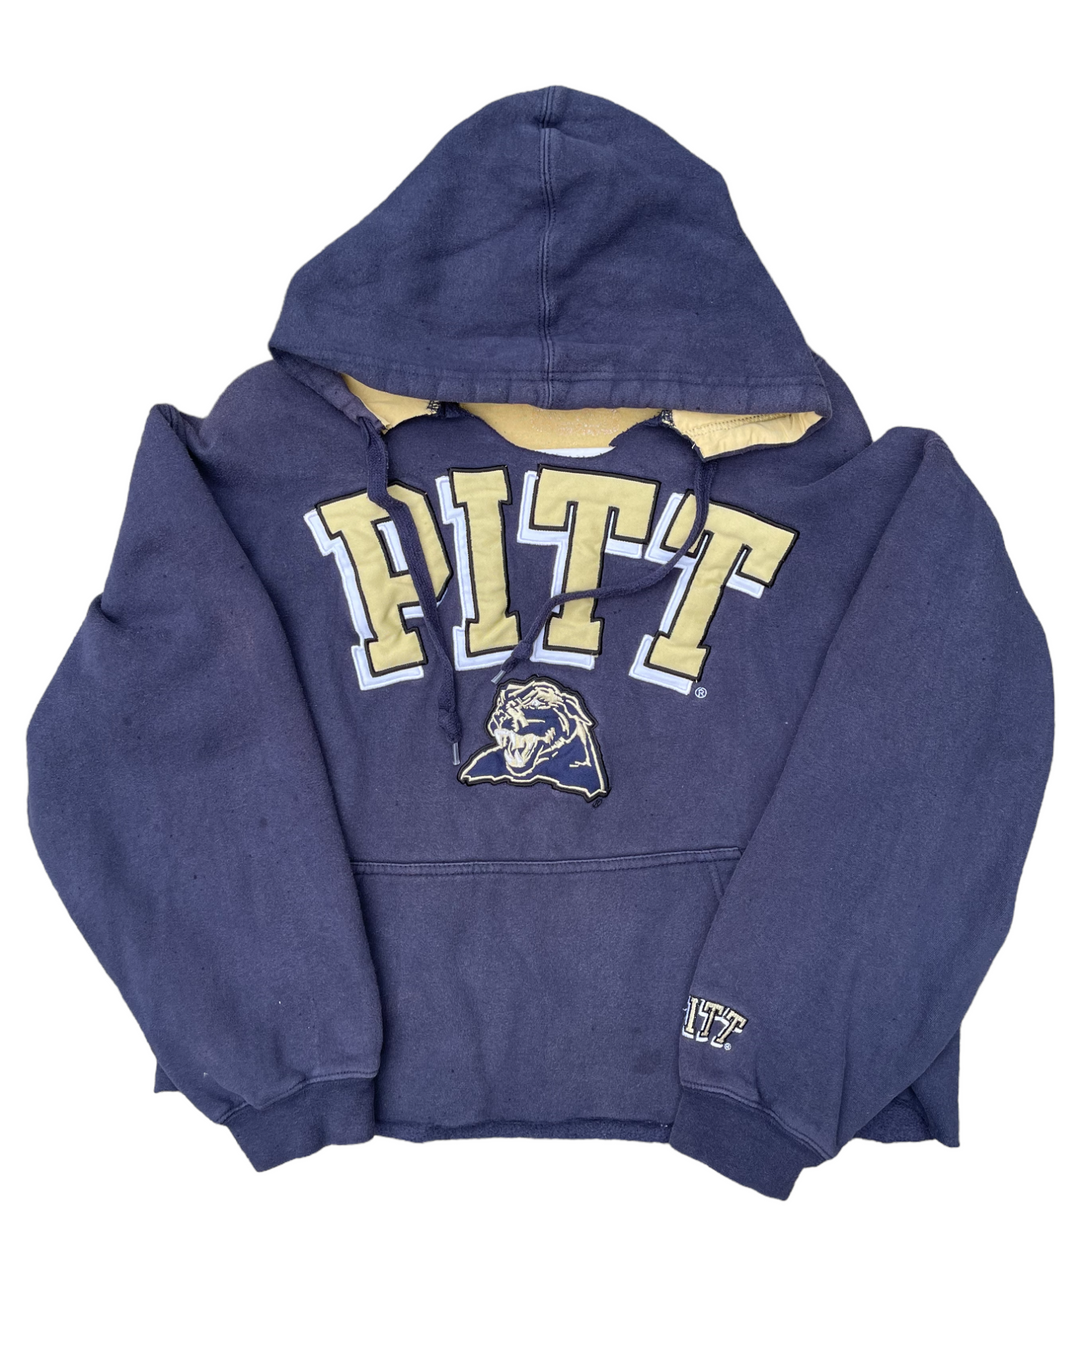 Pitt Vintage Sweatshirt